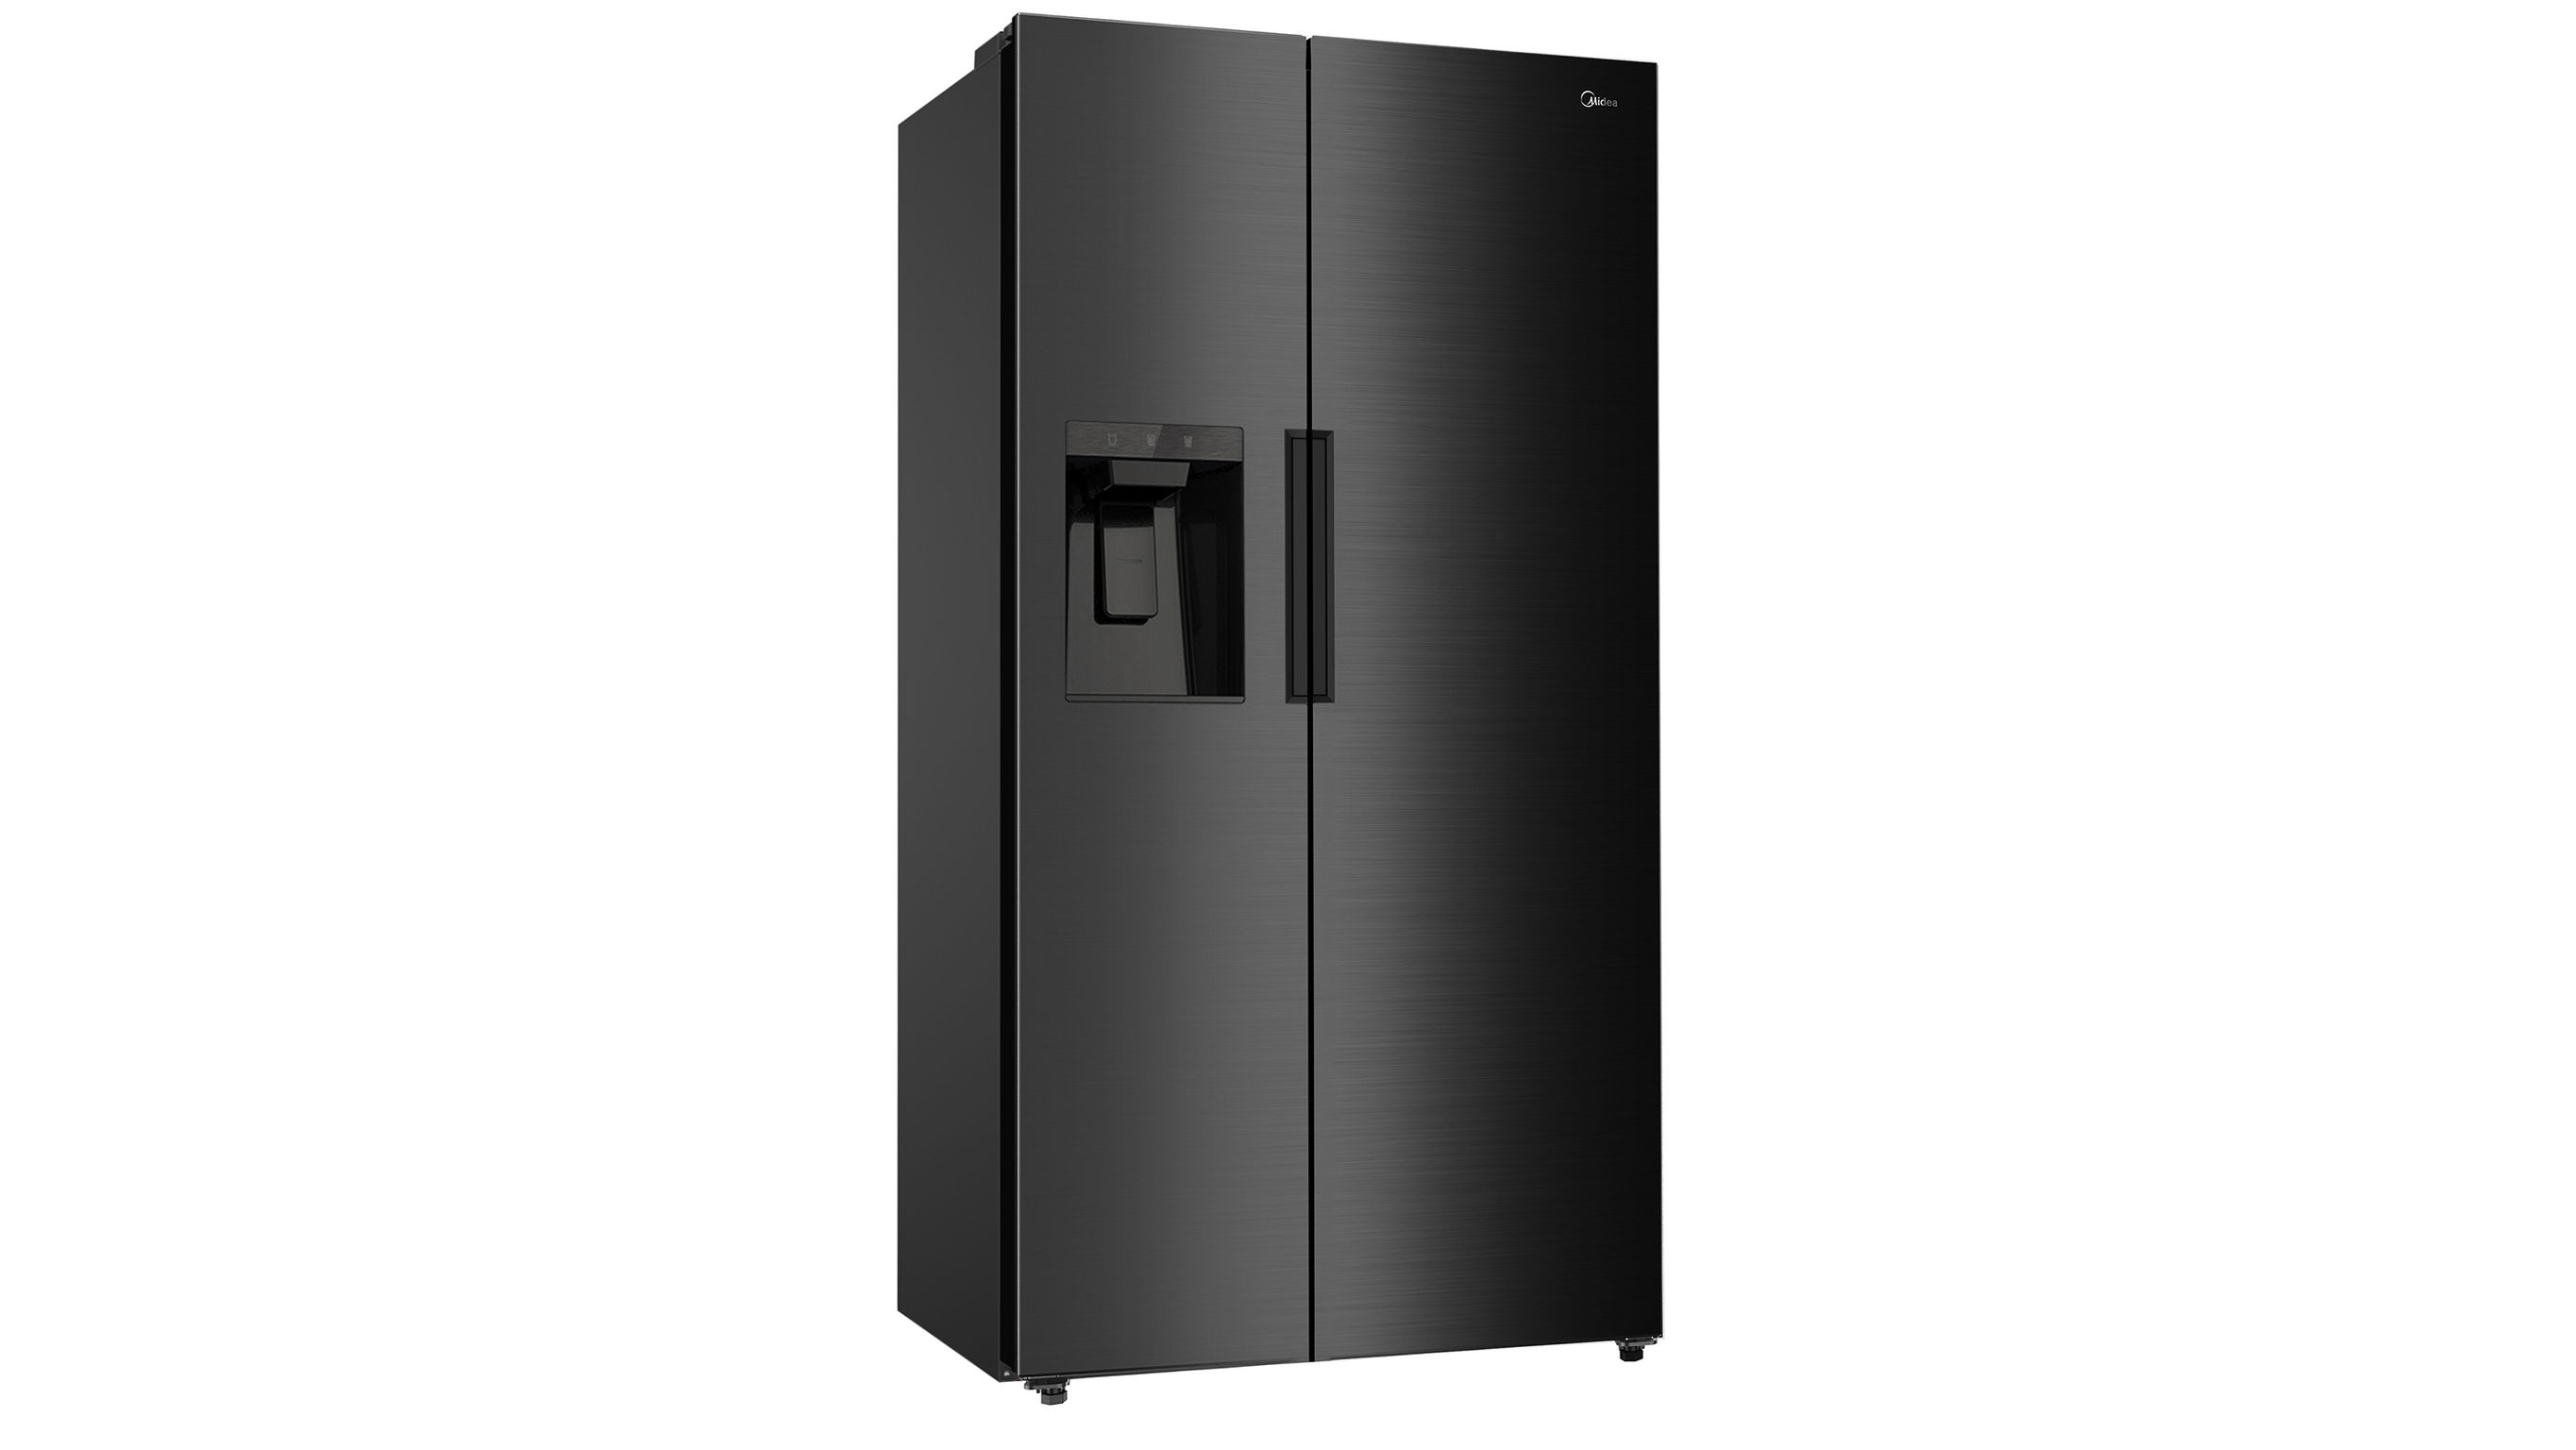 North American French door series refrigerators